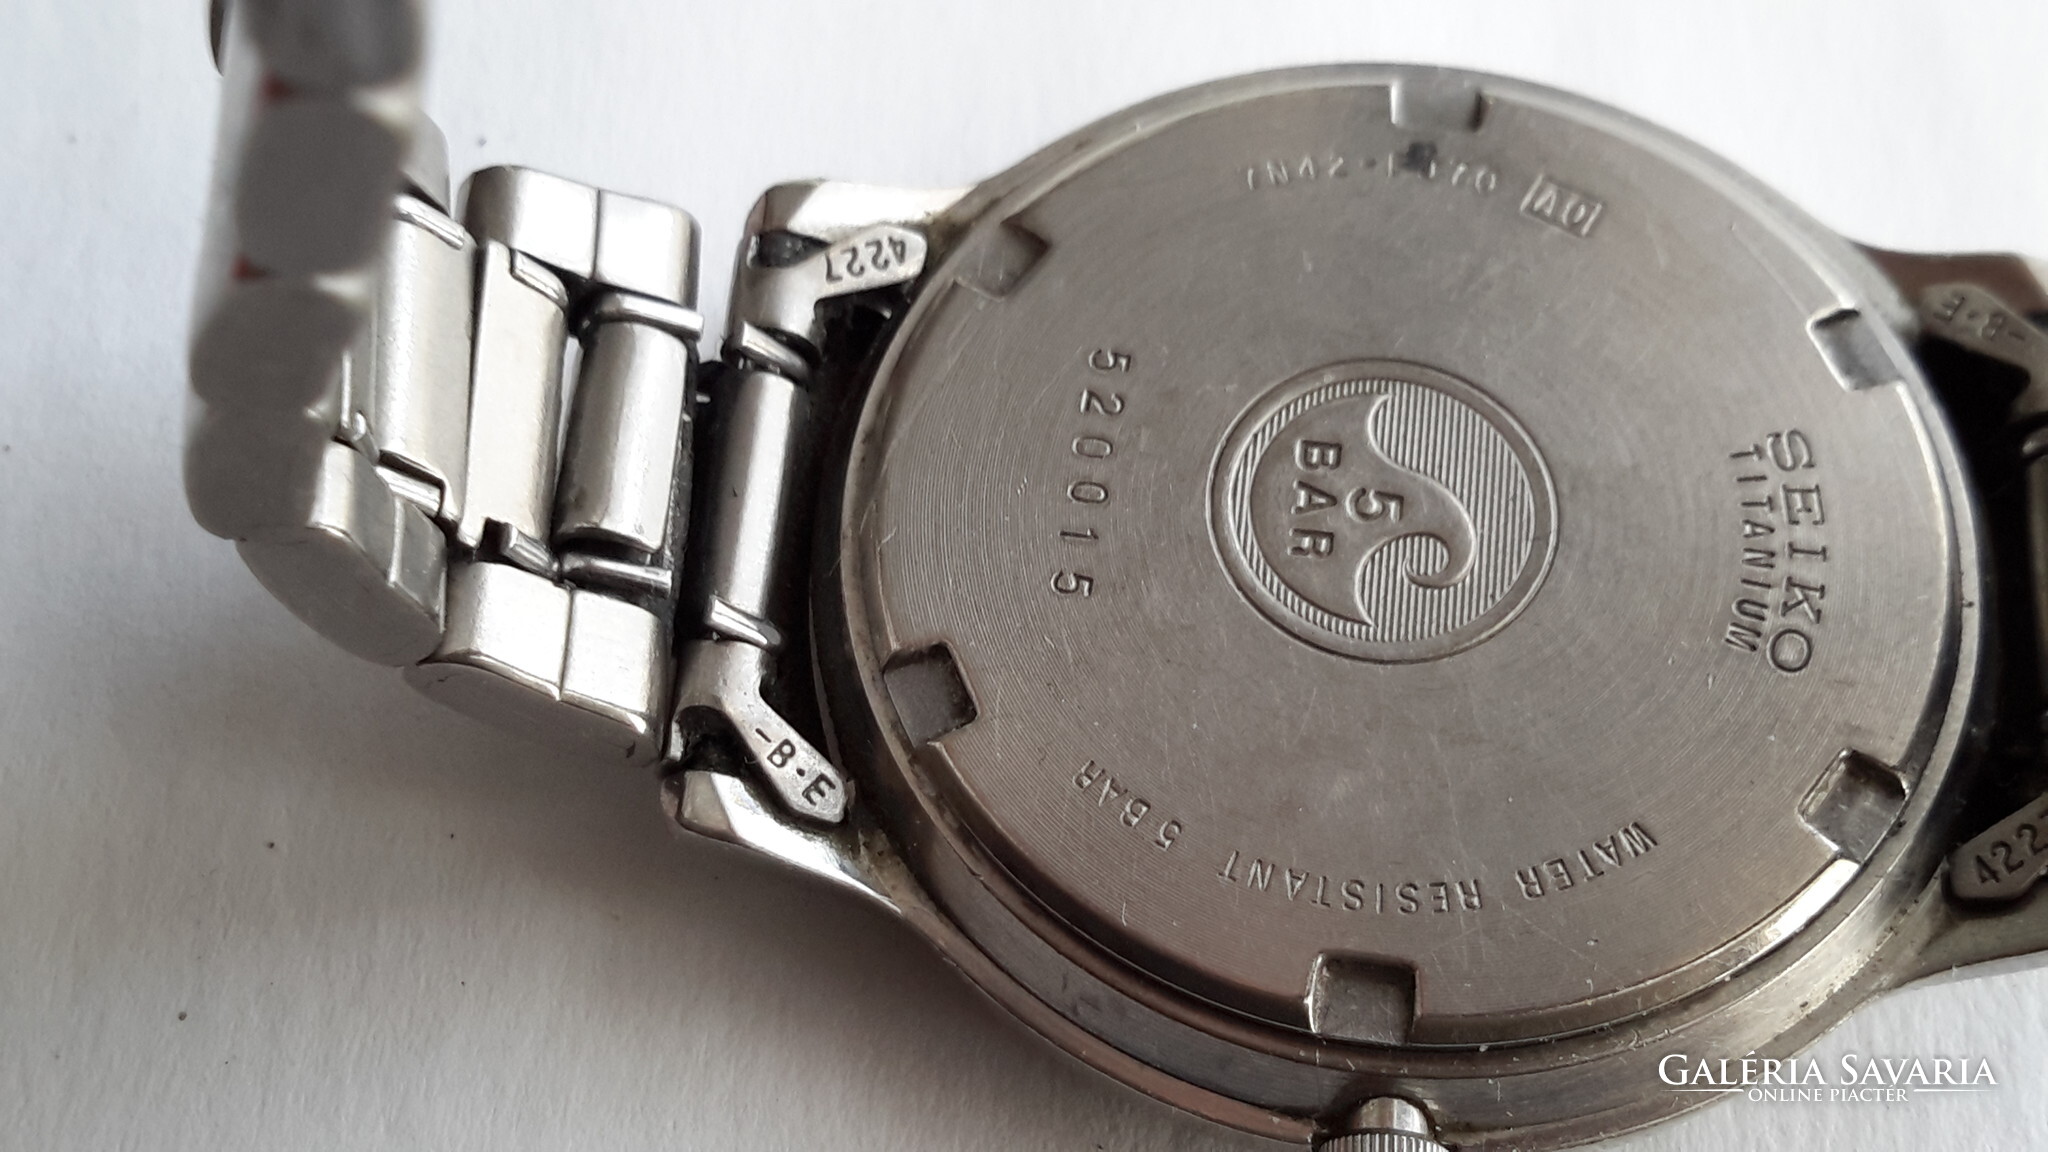 Seiko titanium 5 bar quartz, men's watch - Clocks & Watches | Galeria  Savaria online marketplace - Buy or sell on a credible, high quality  platform.